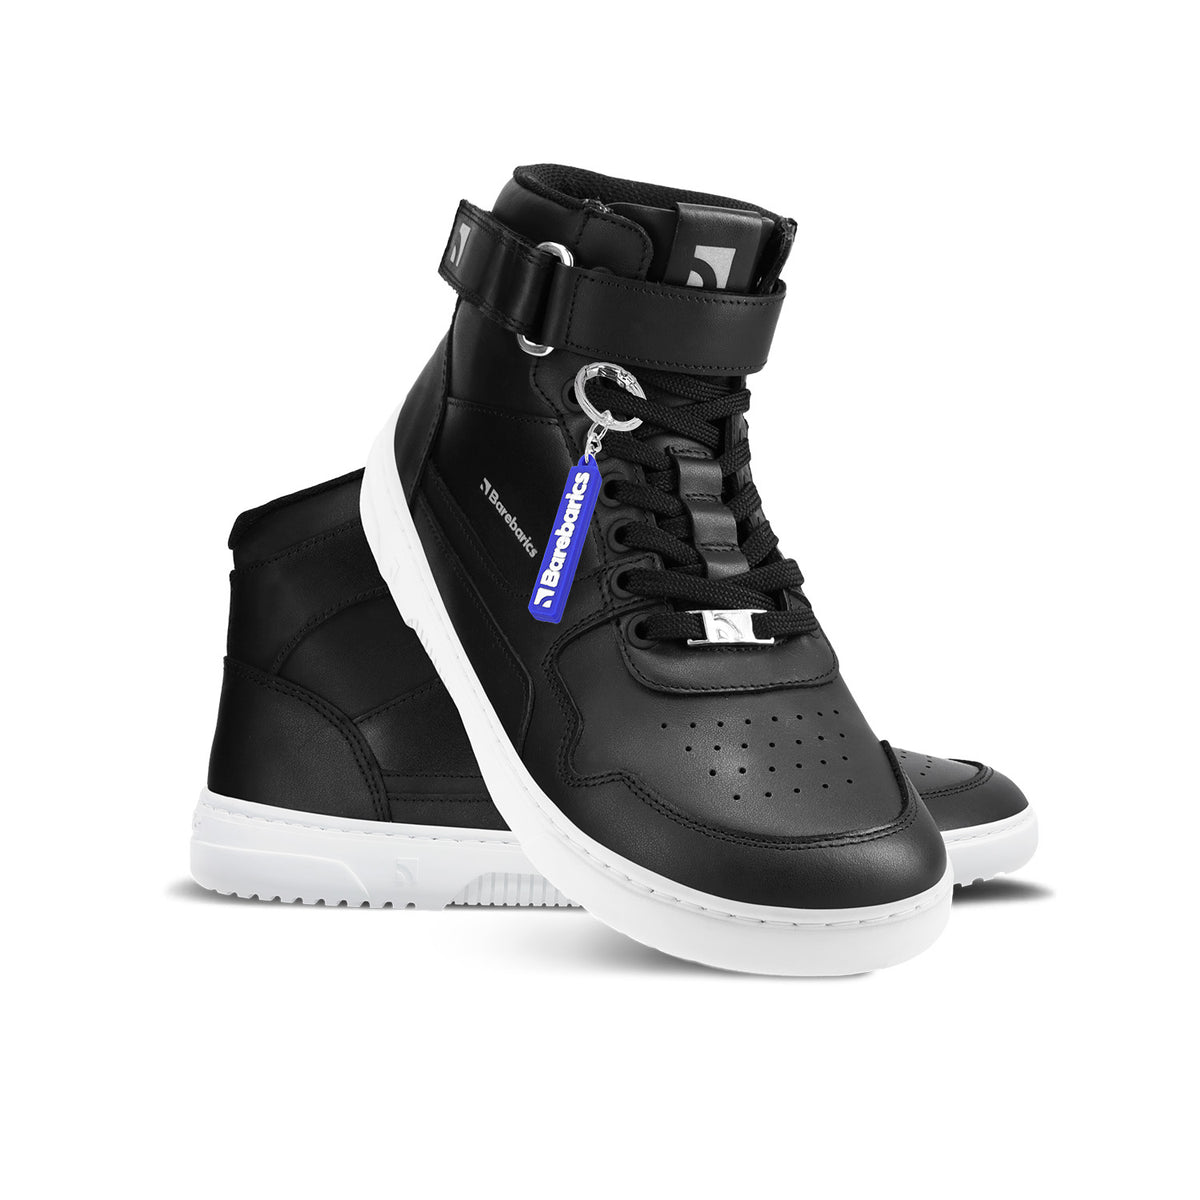 Barefoot Sneakers Barebarics Zing - High Top - Black & White - Leather 2  - OzBarefoot